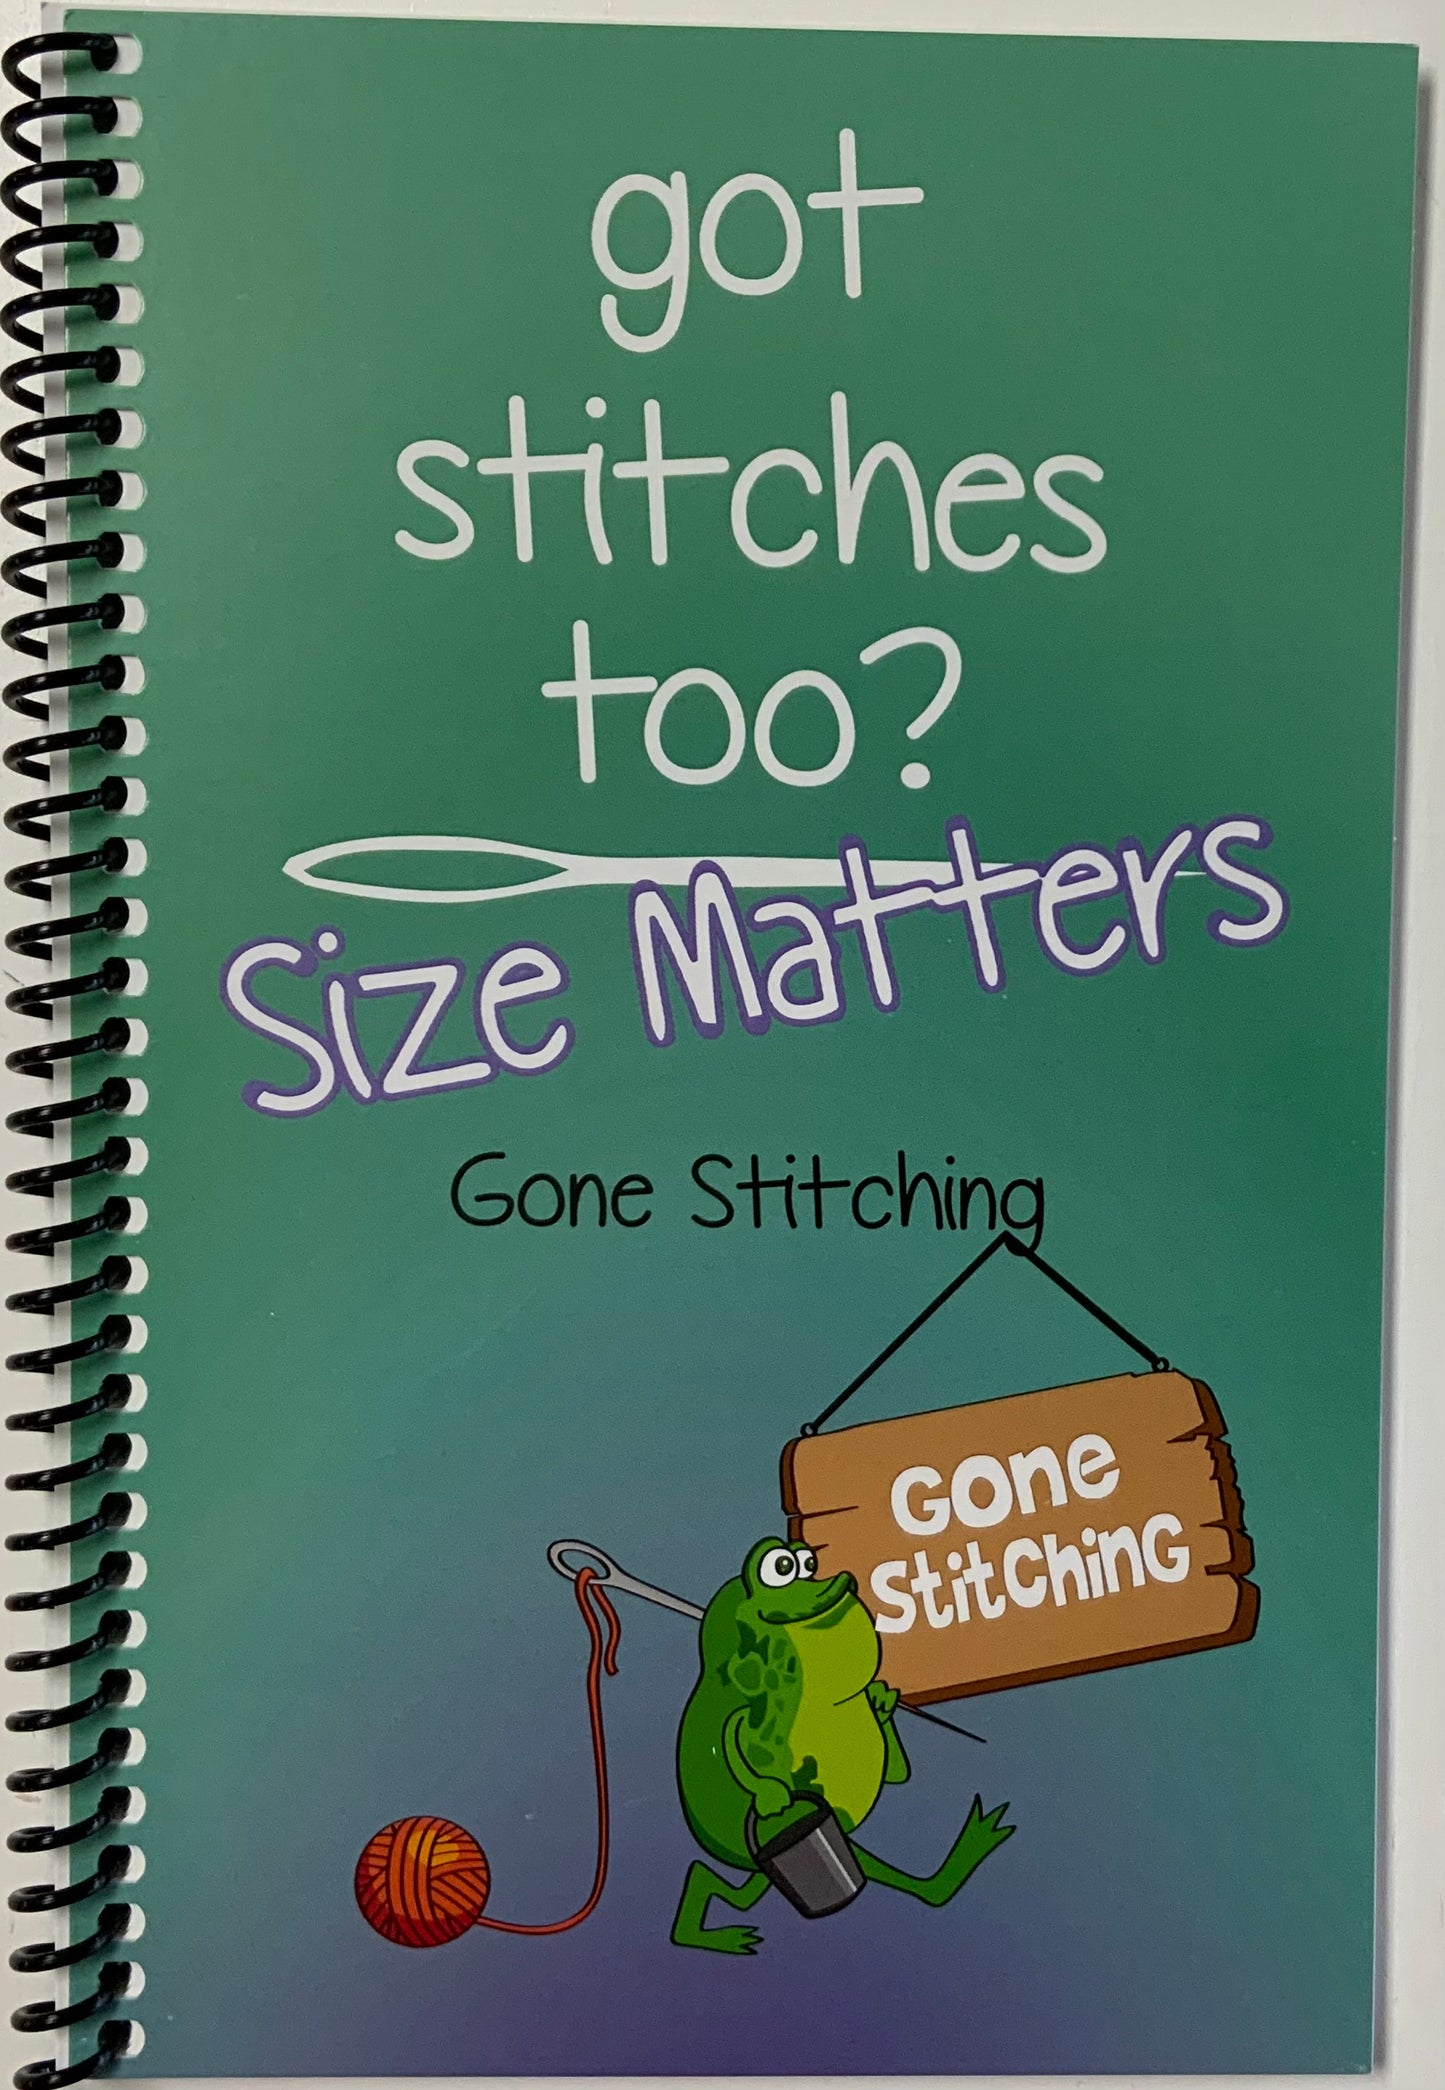 Book Got Stitches Too? Size Matters Gone Stitching